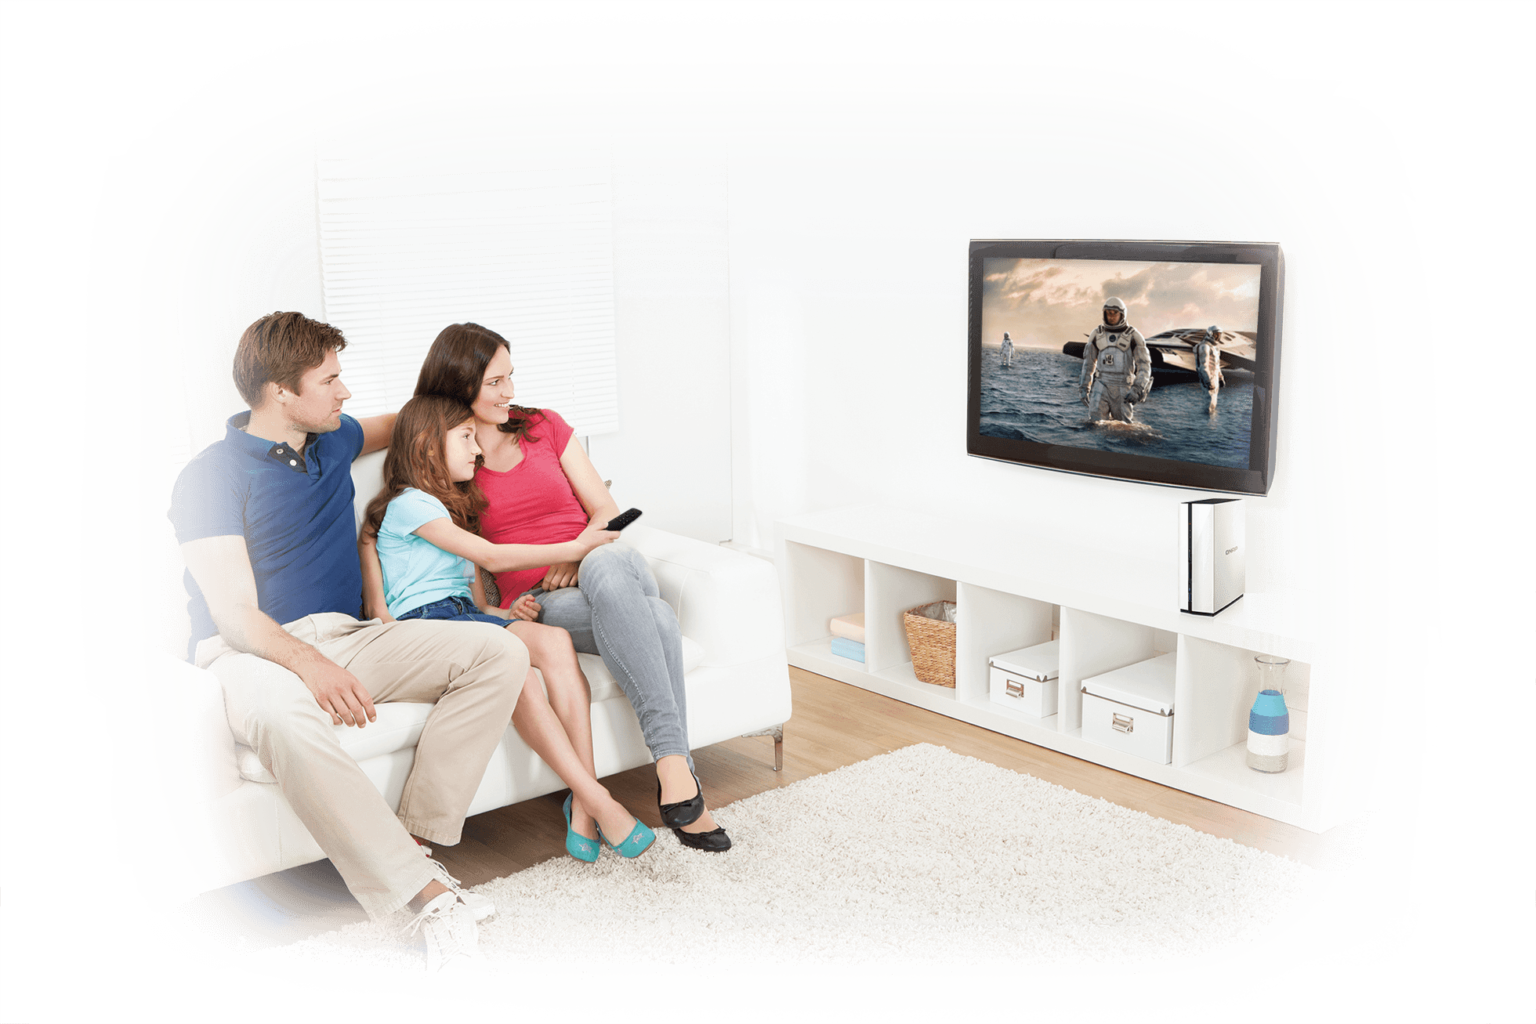 Семья смотрит тв. Телевизор. Семья у телевизора. Семья смотрит телевизор. Человек перед телевизором.